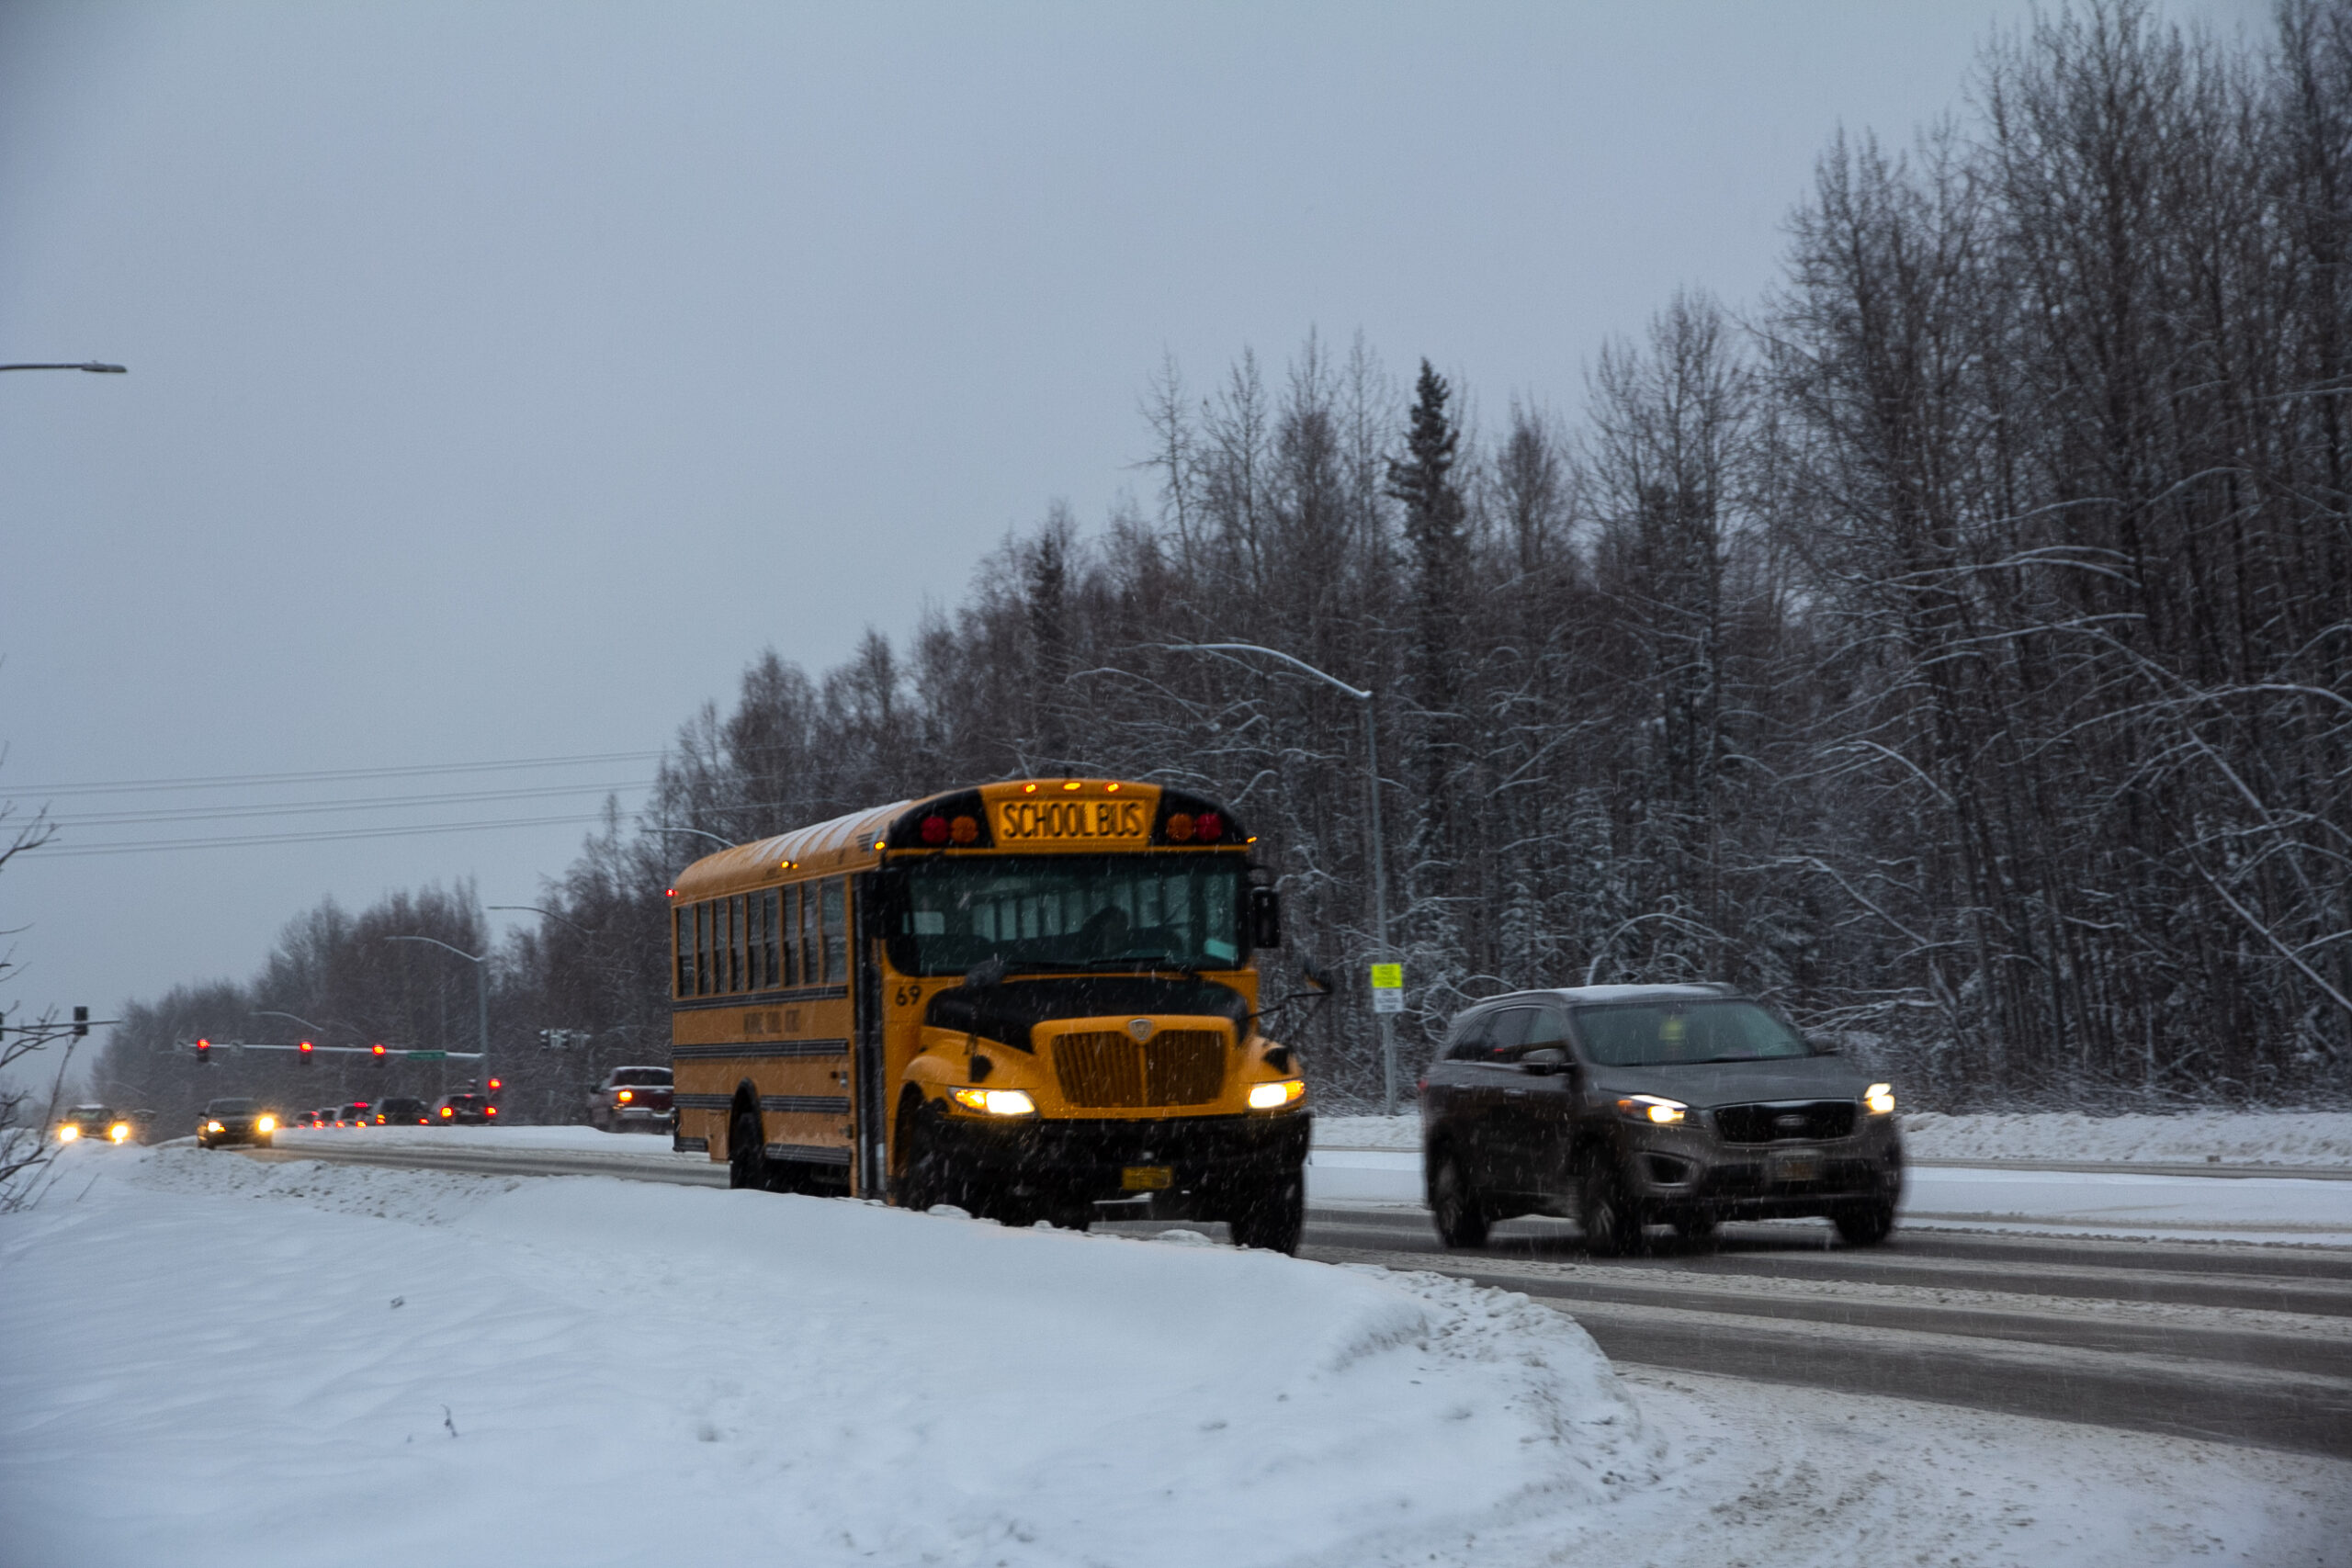 A school bus and an SUV drive on a snowy road under an overcast sky.